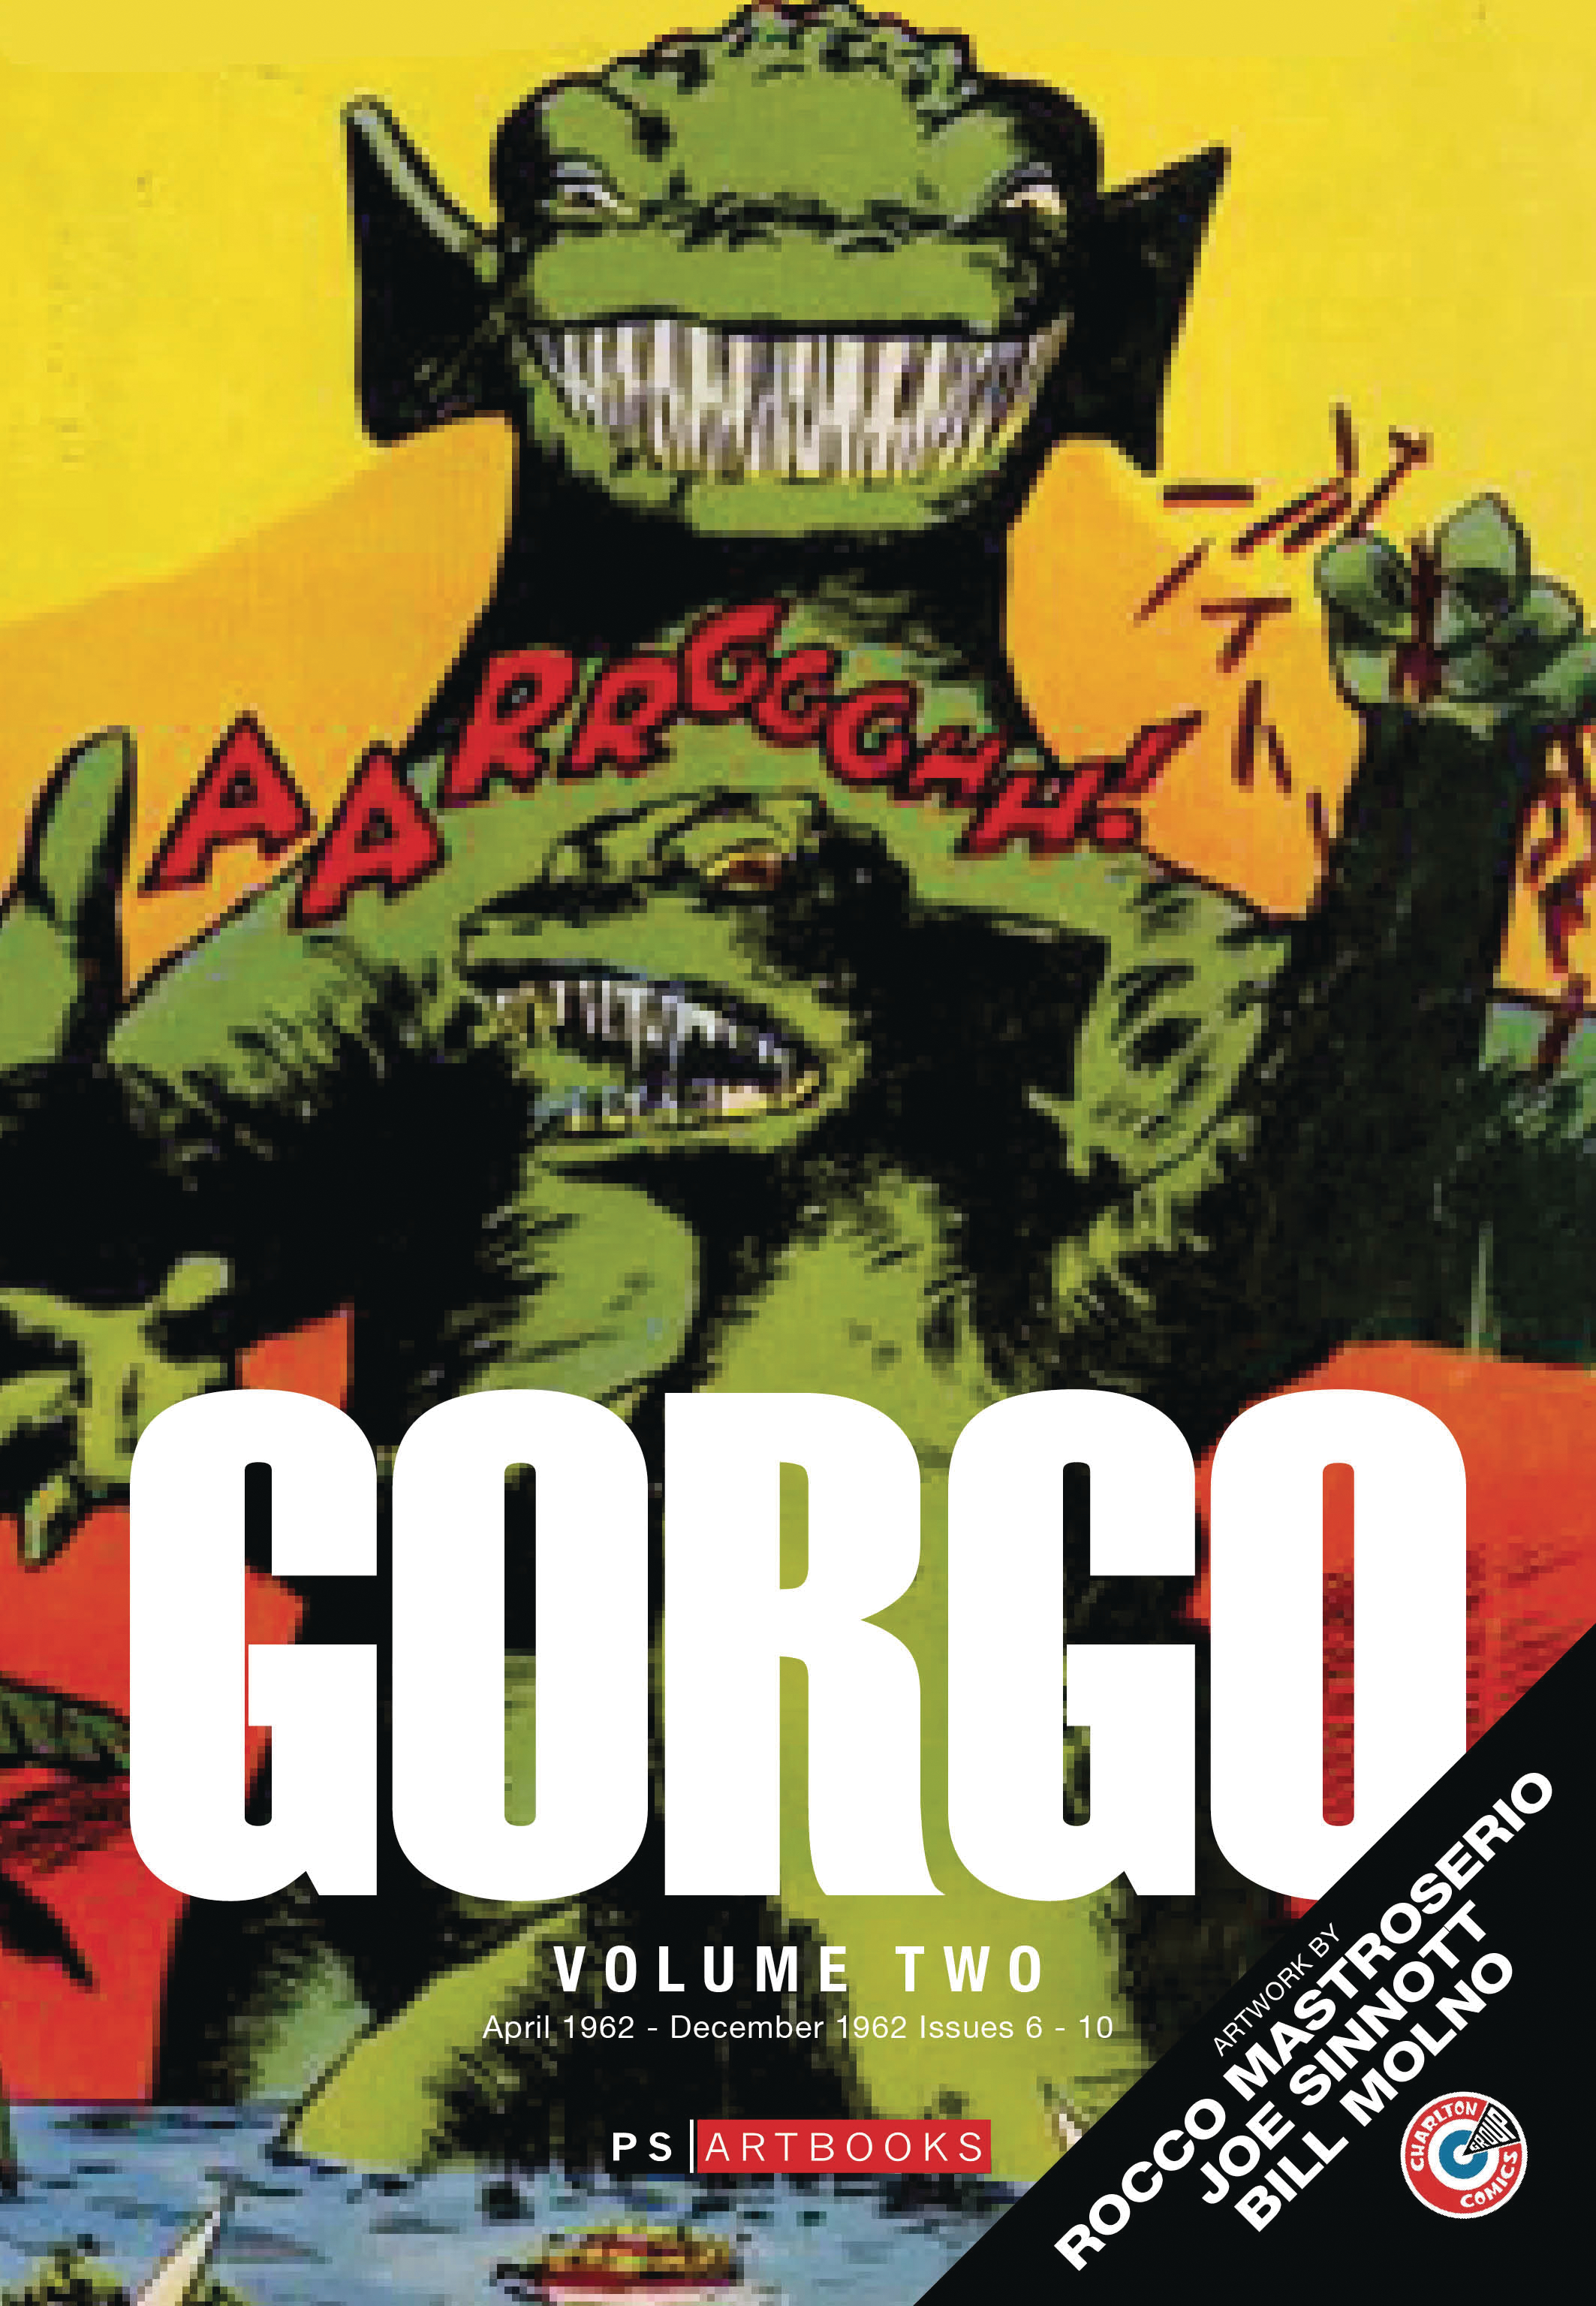 Silver Age Classics Gorgo Hardcover Volume 2